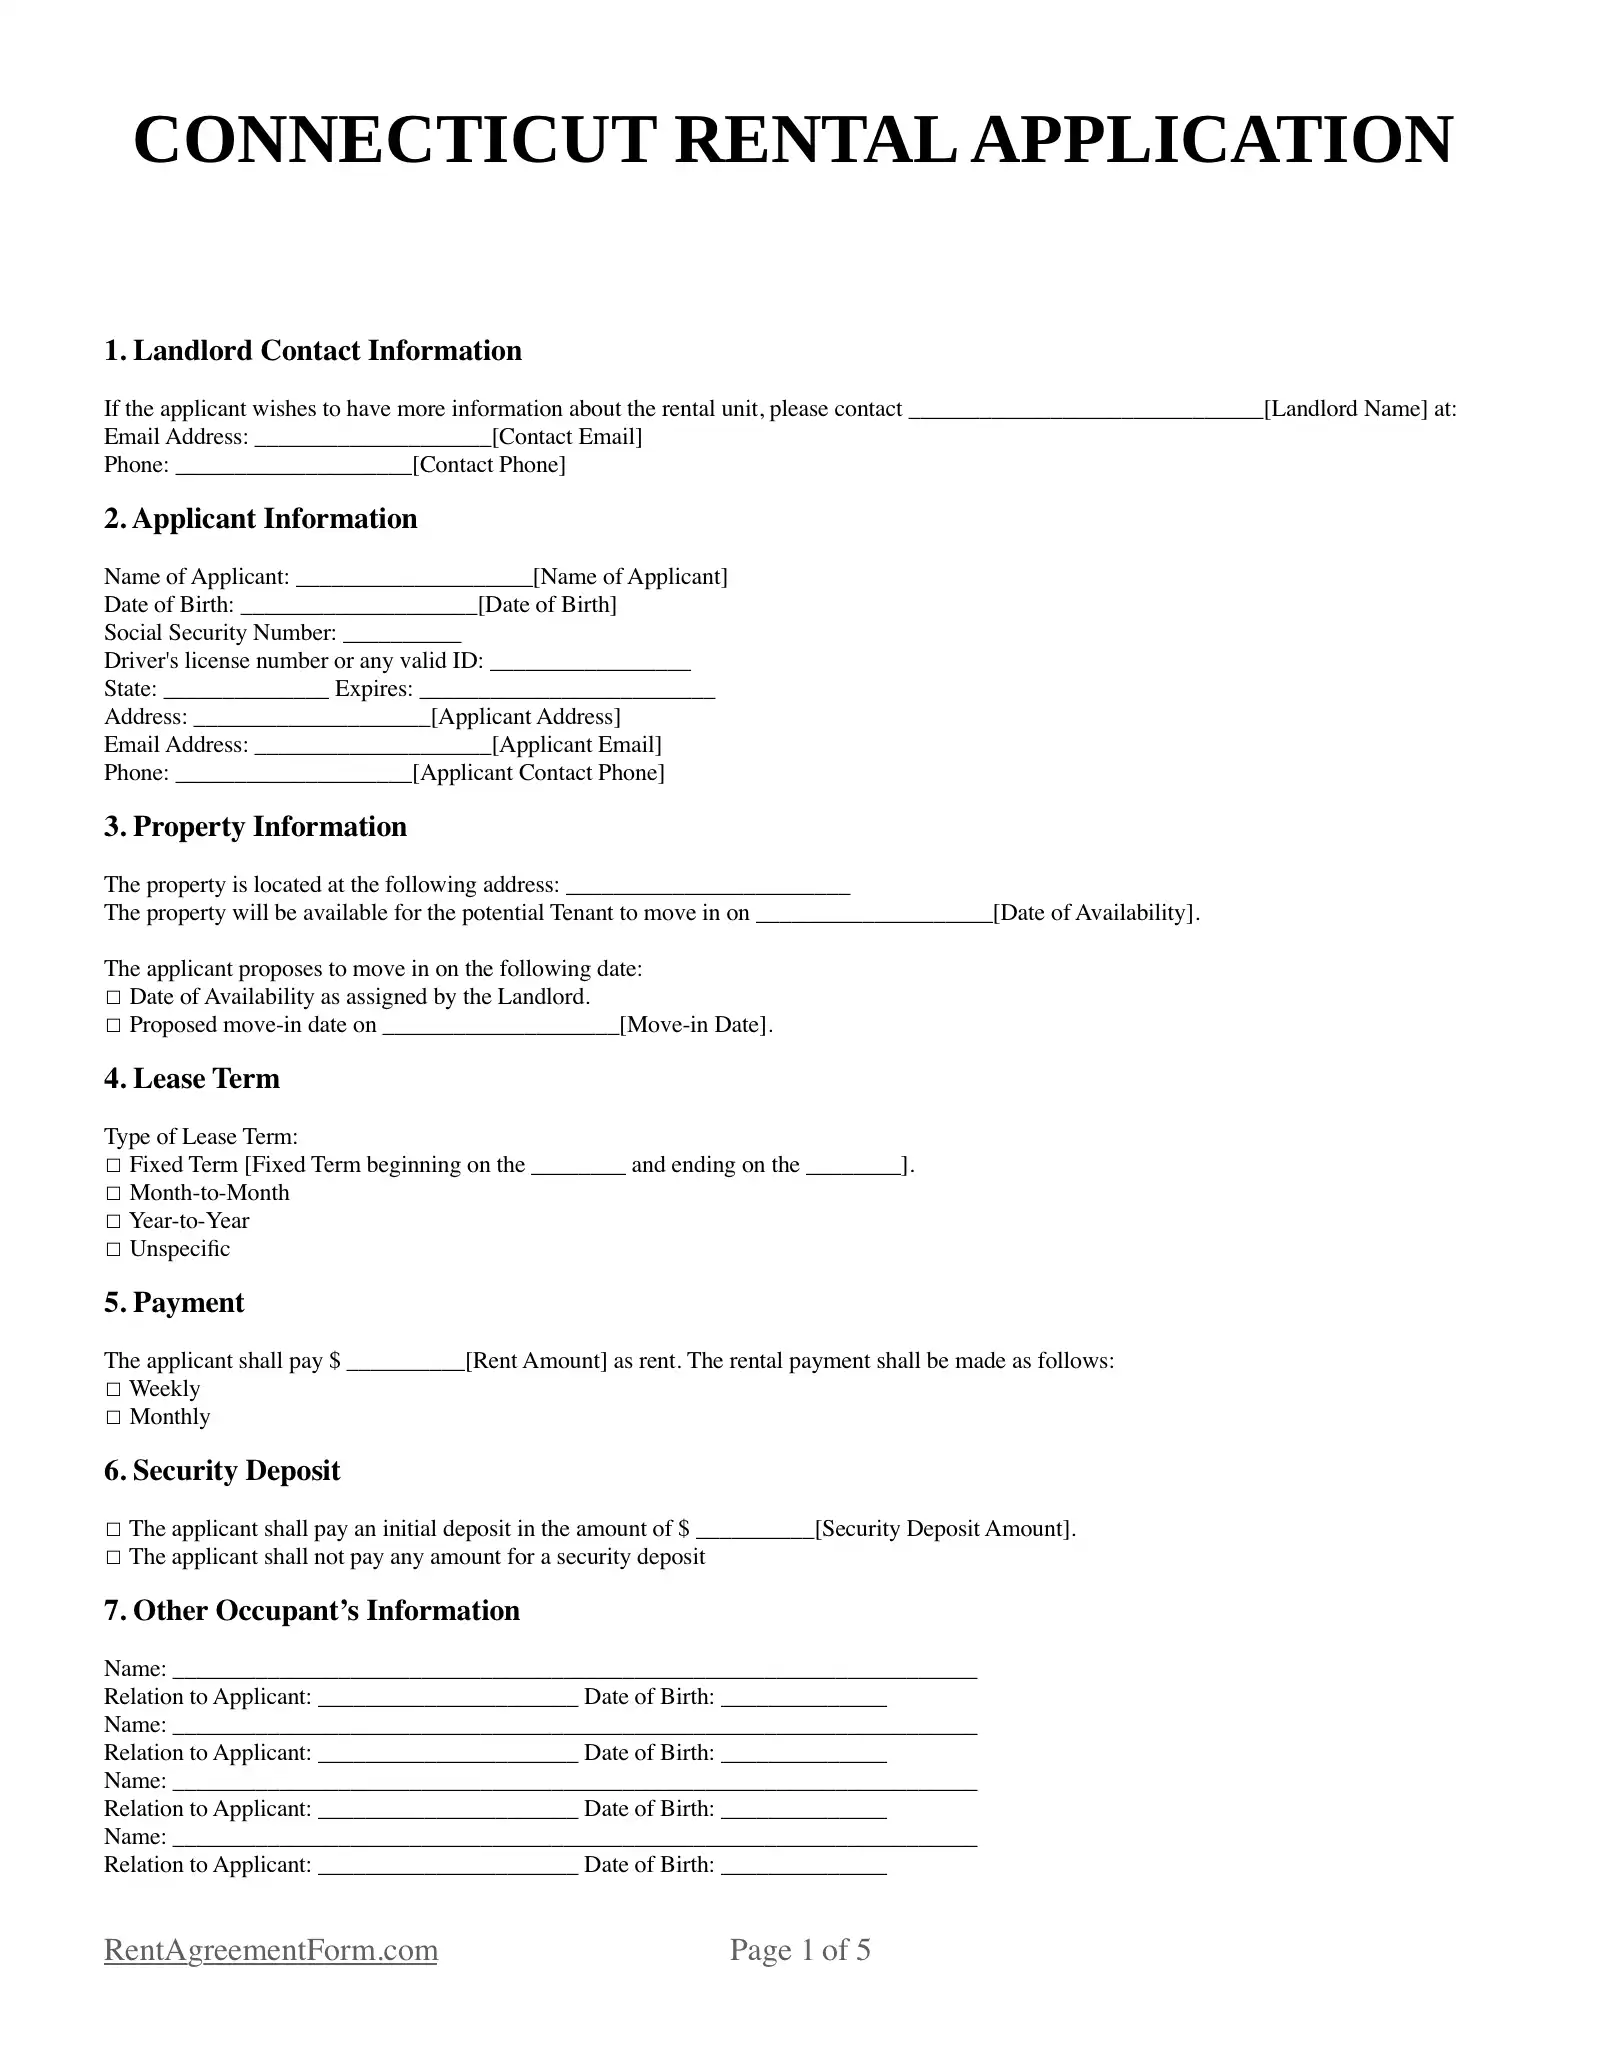 Connecticut Rental Application Sample